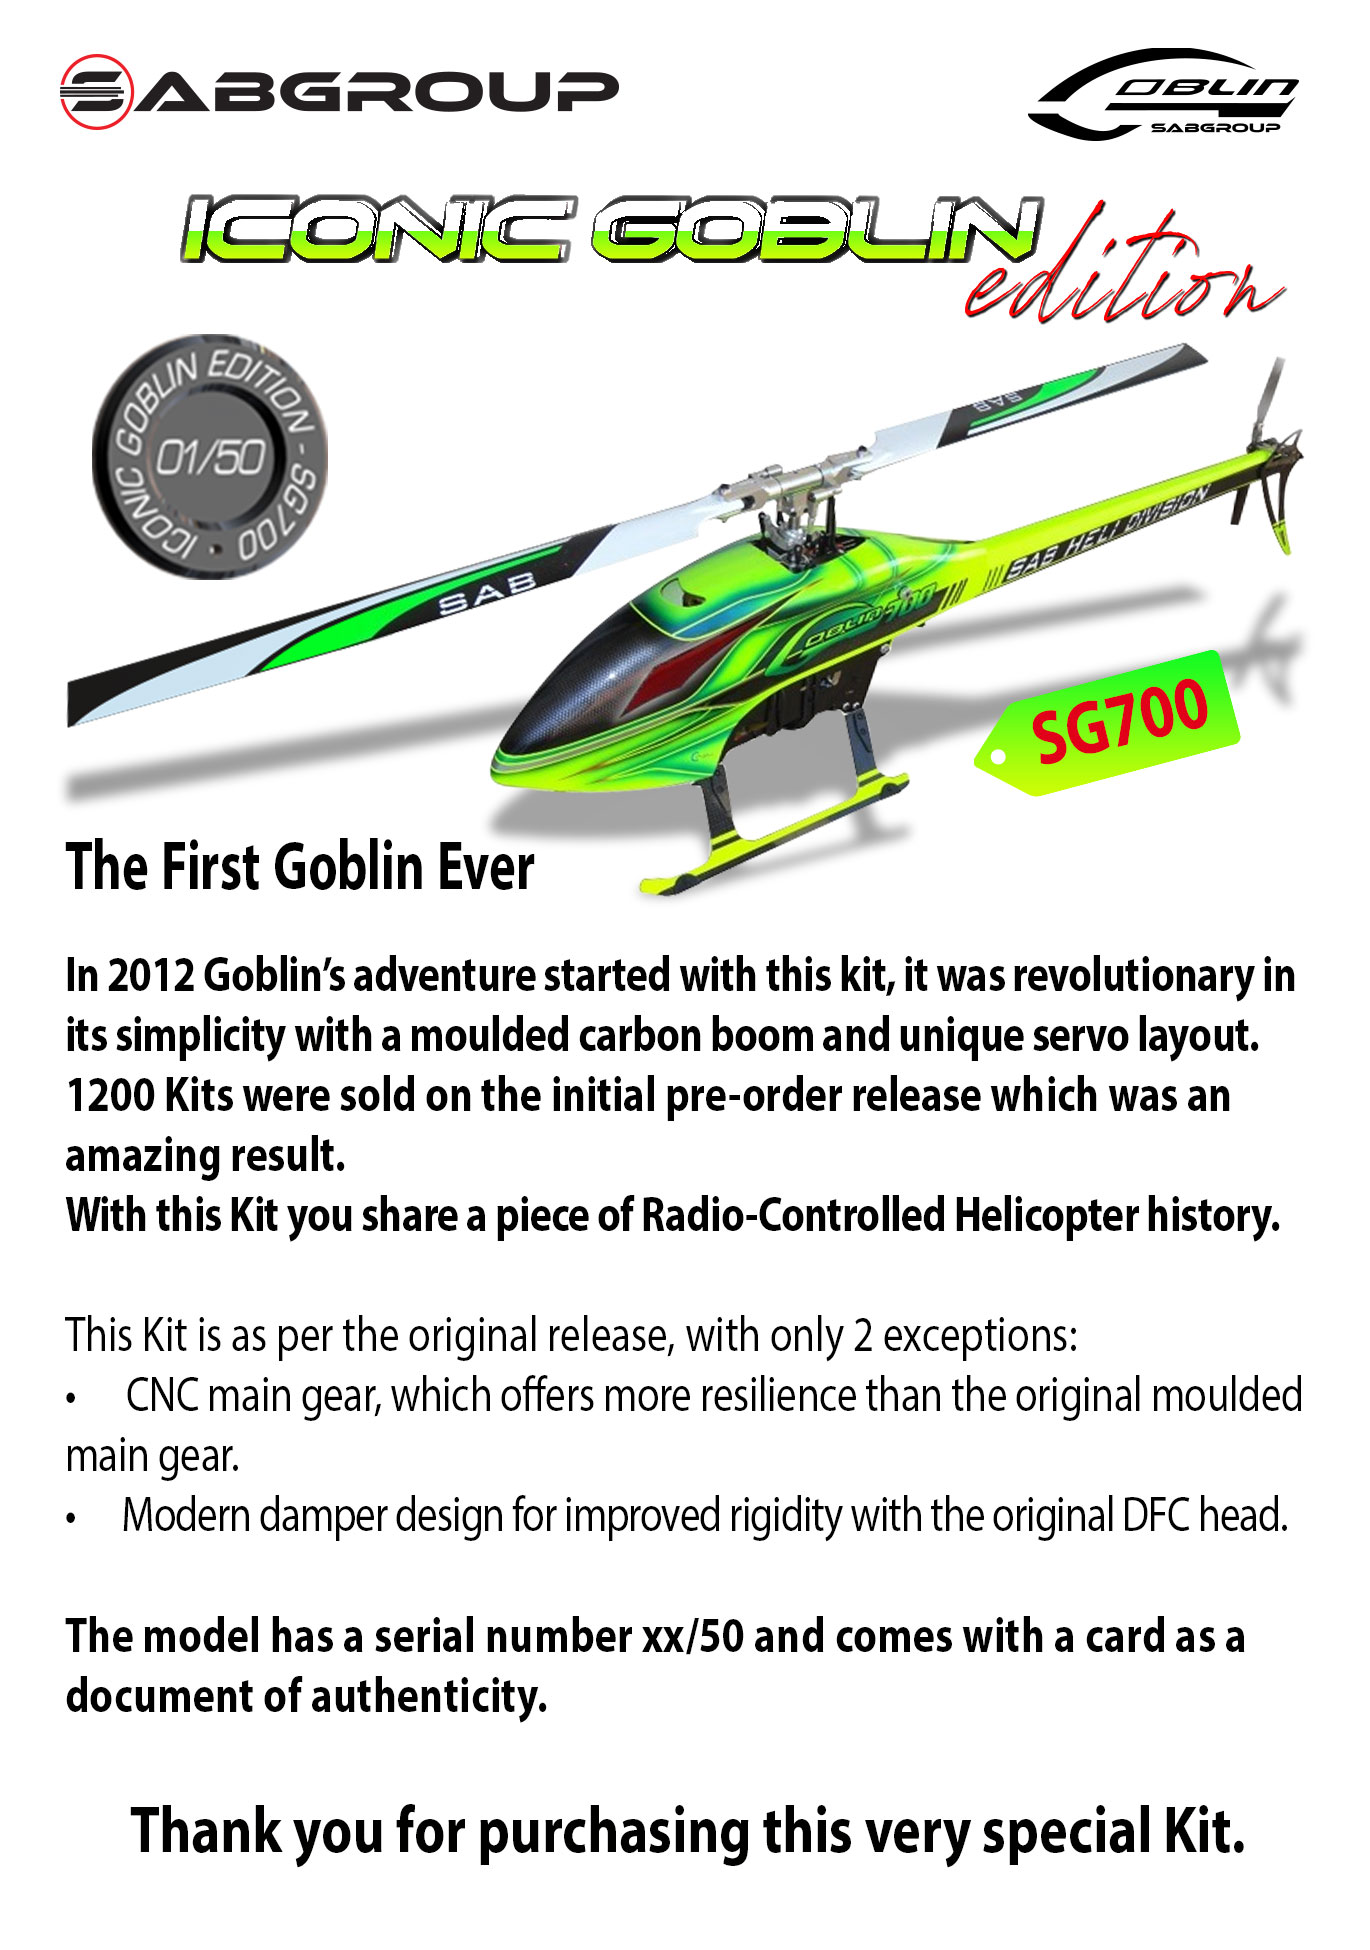 goblin-700-iconic-edition---description.jpg